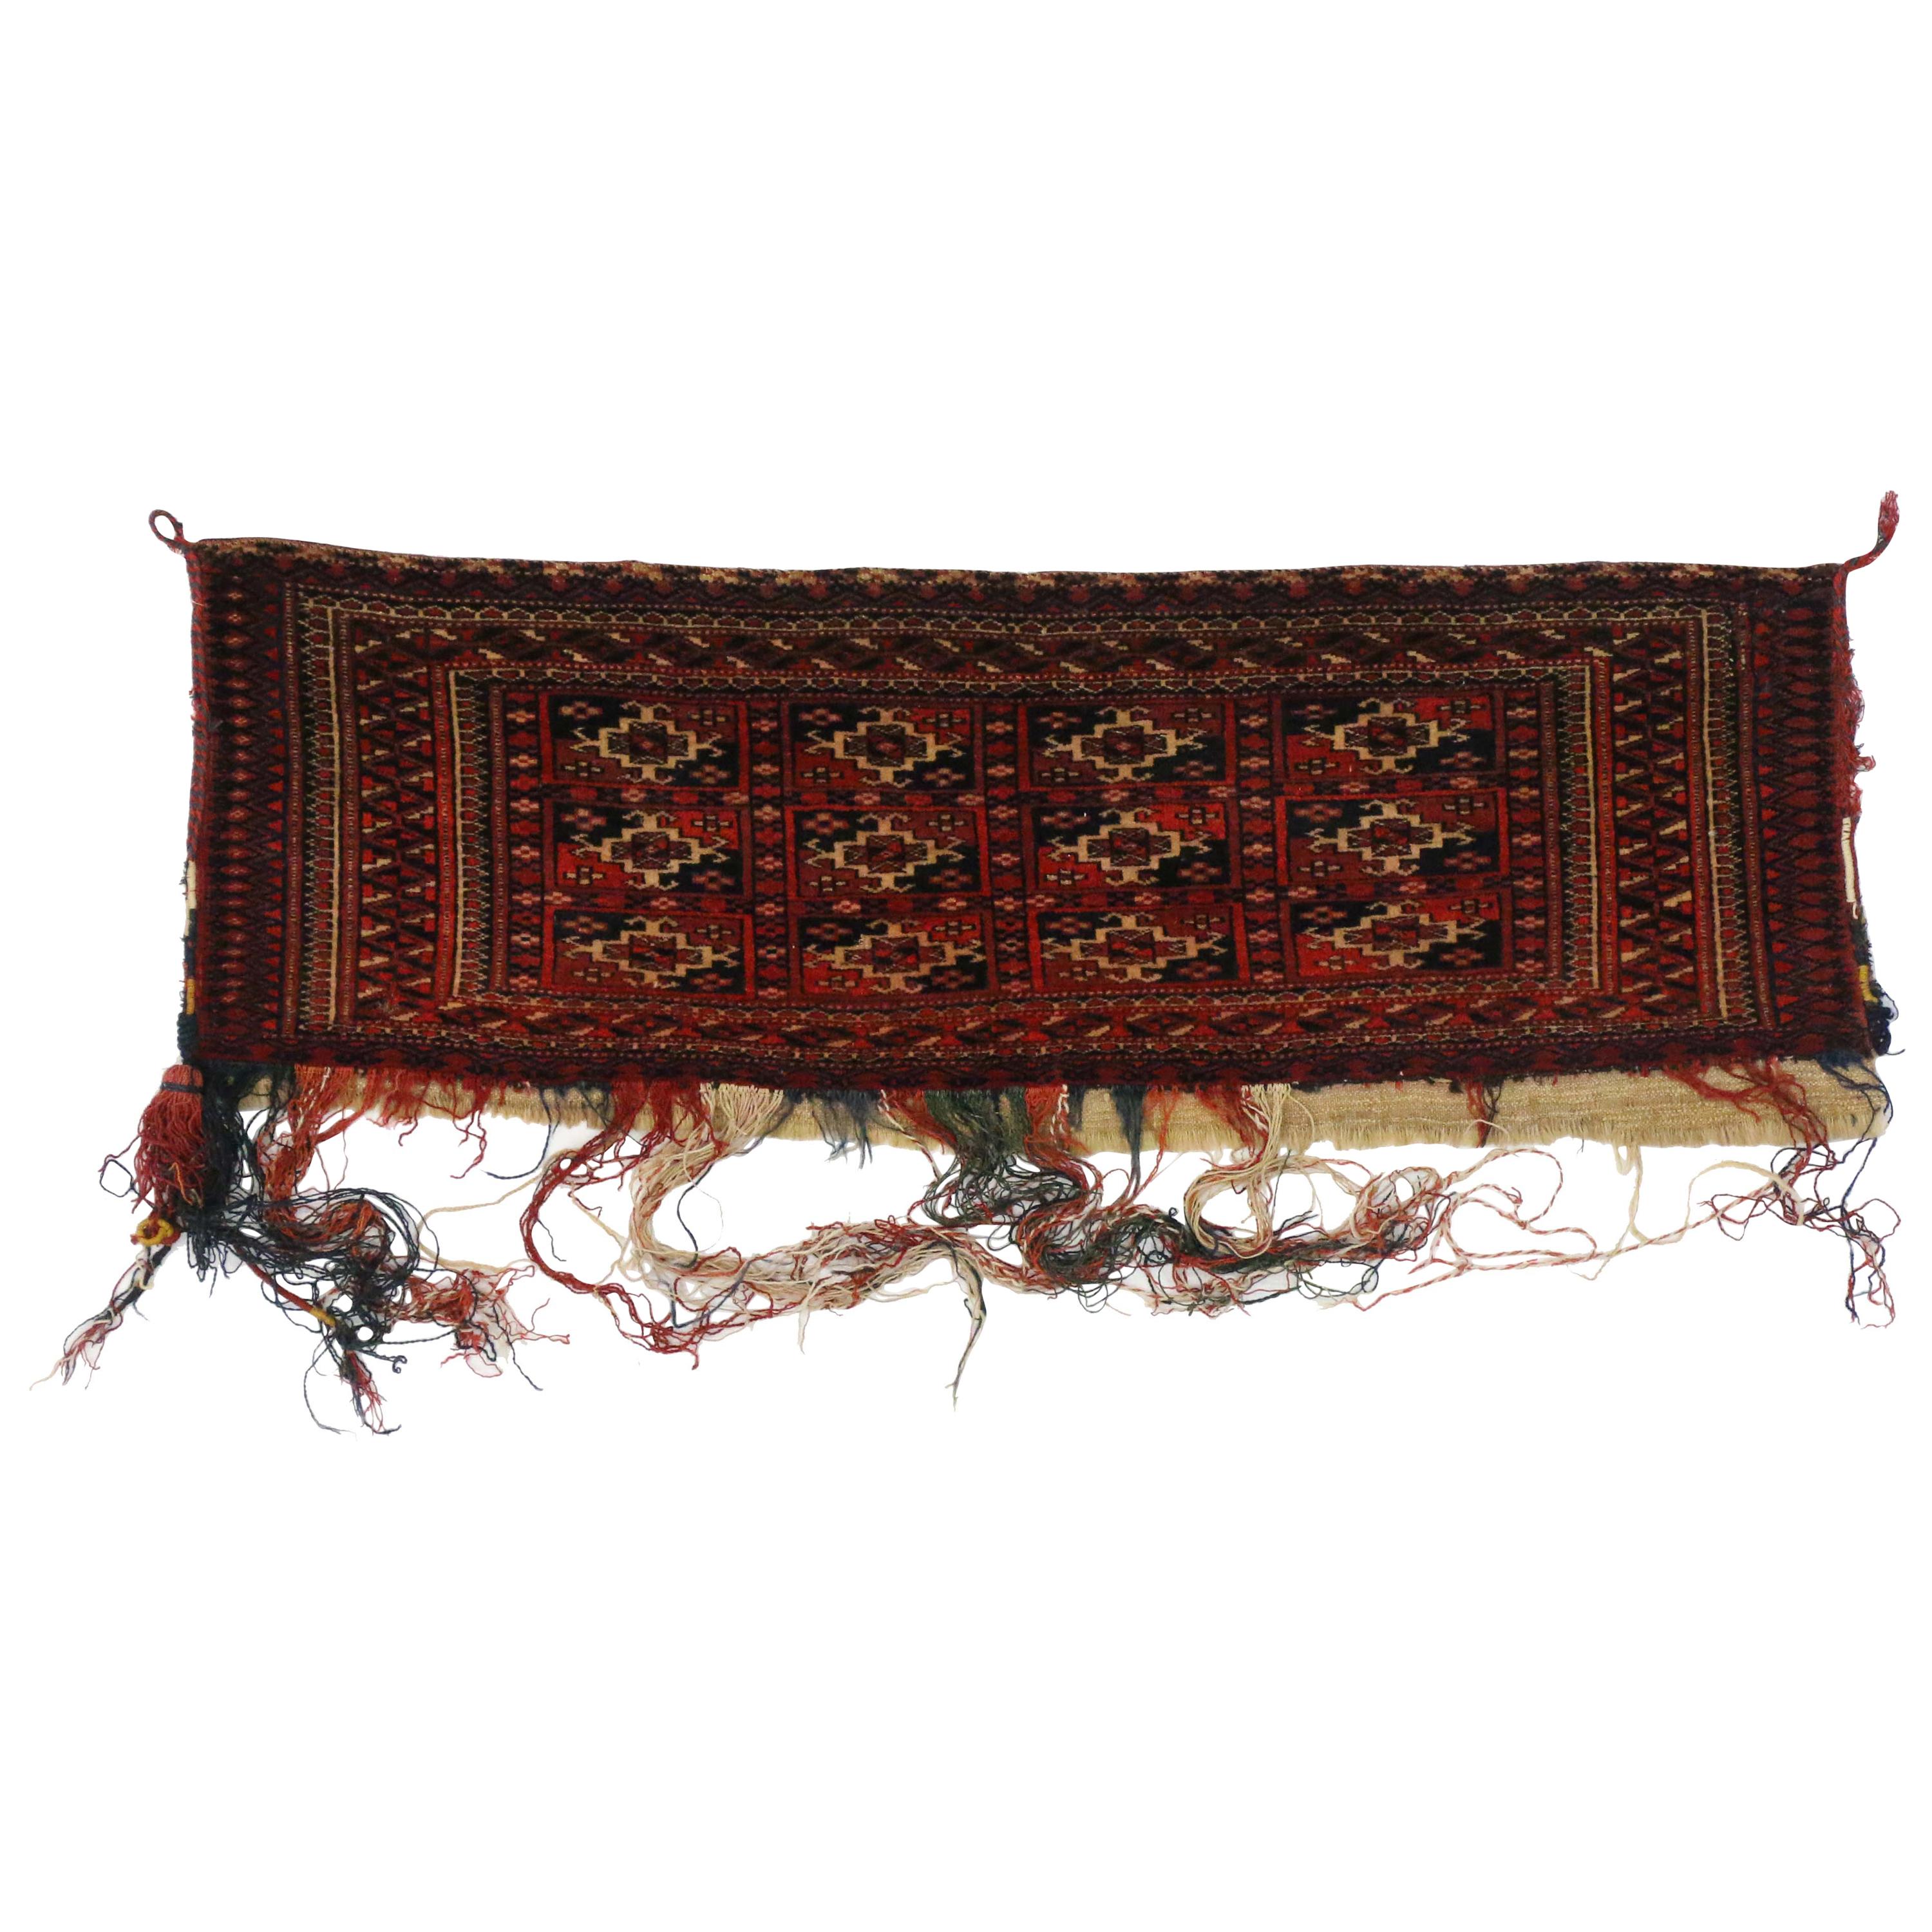 Ancien sac turkoman afghan ancien de Turkmen Torba, cintre mural, tapisserie textile tribale